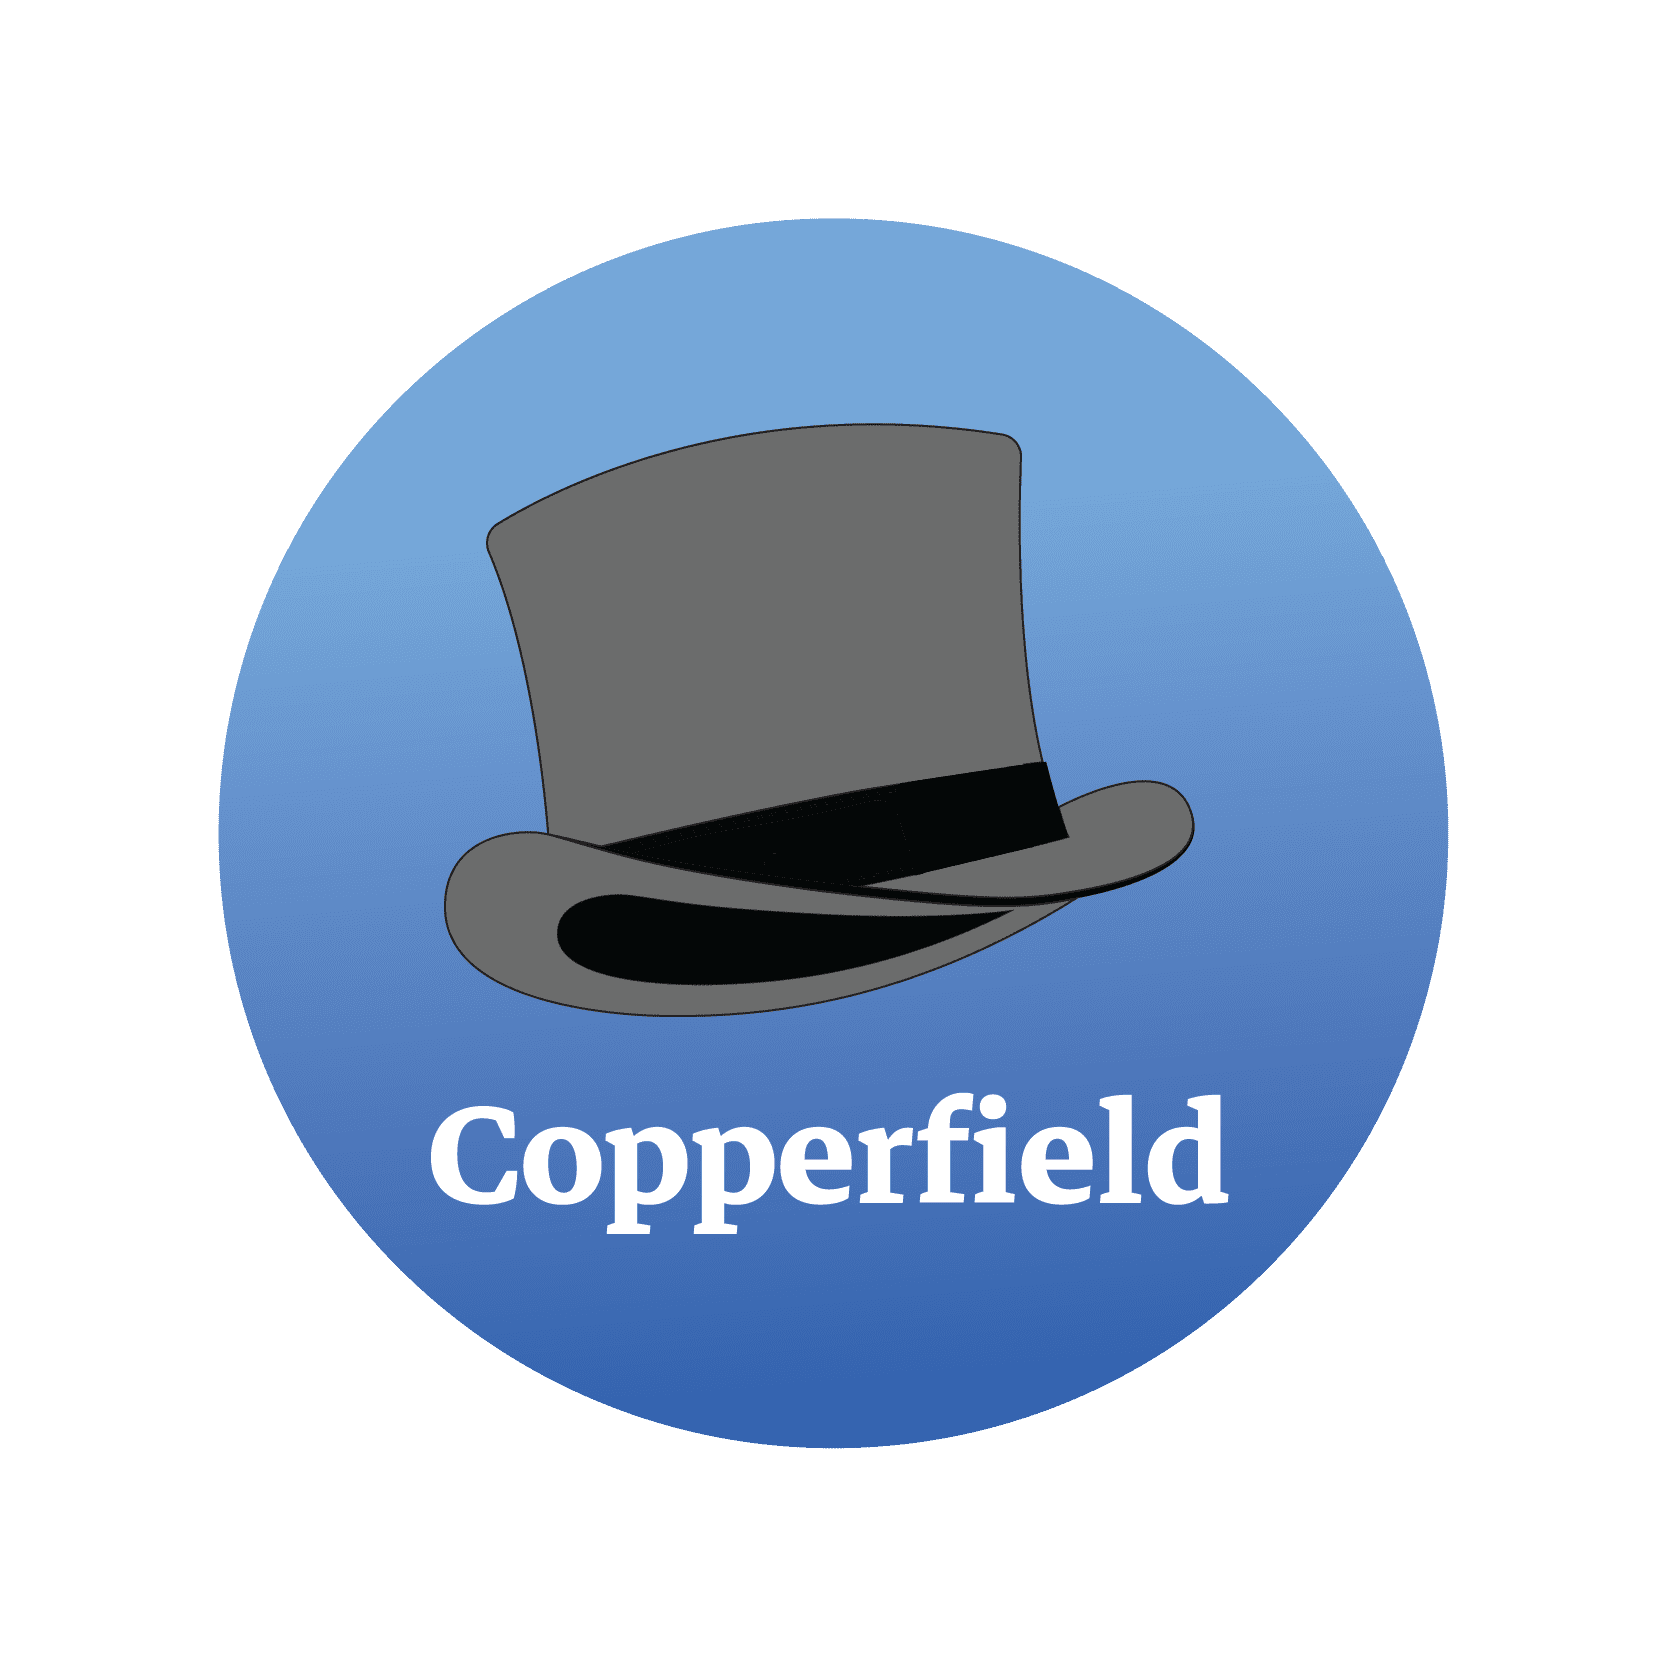 copperfield logo - house shorne